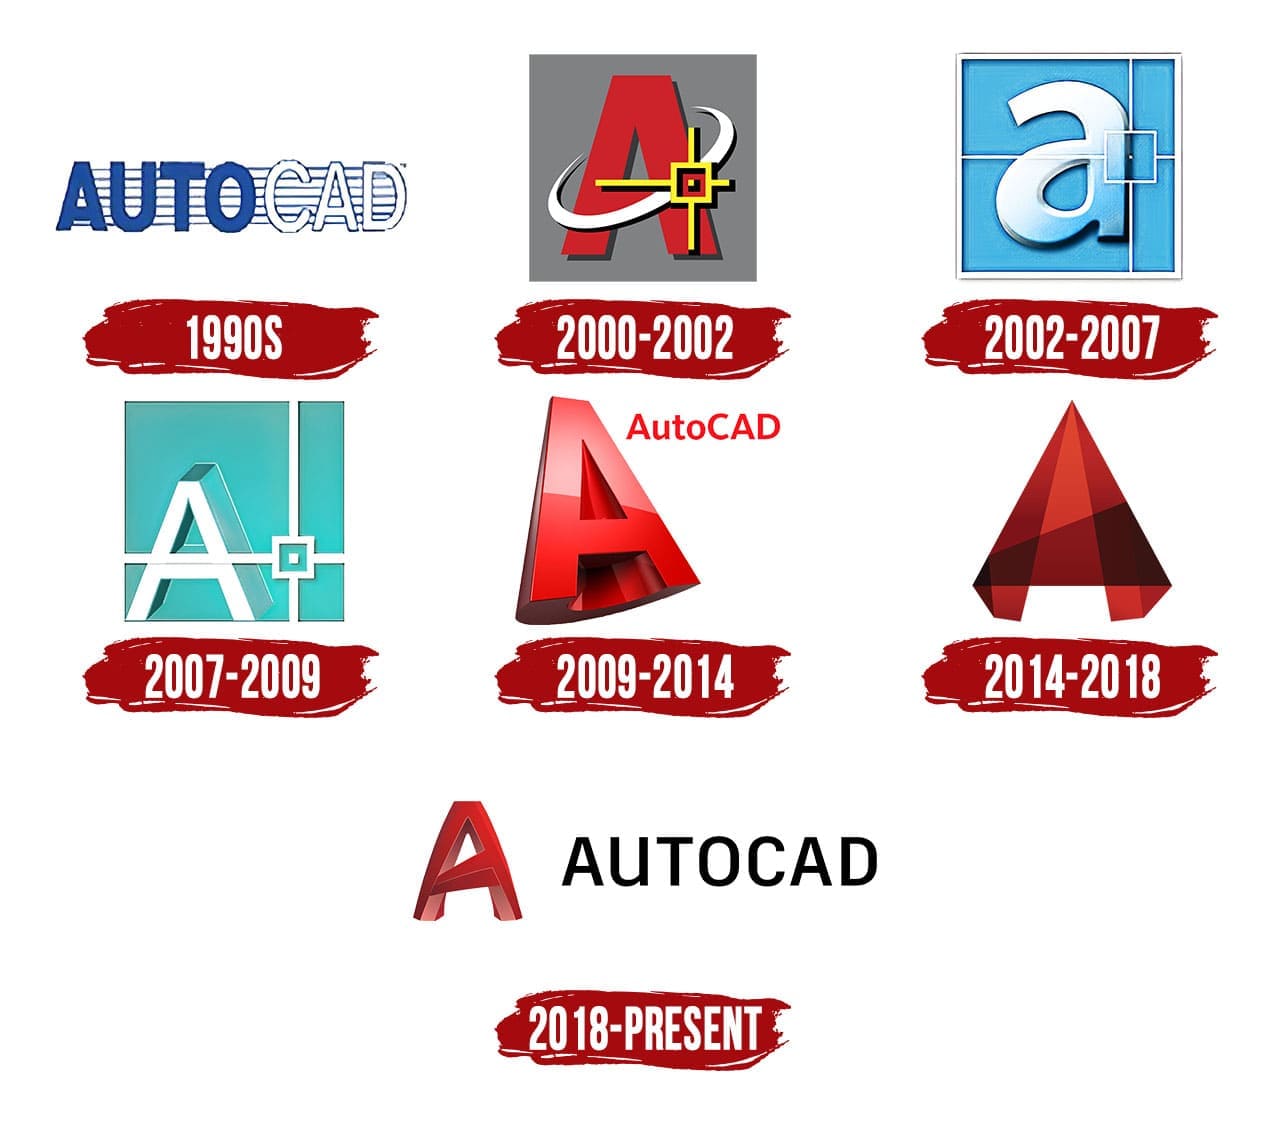 autocad 2021 logo